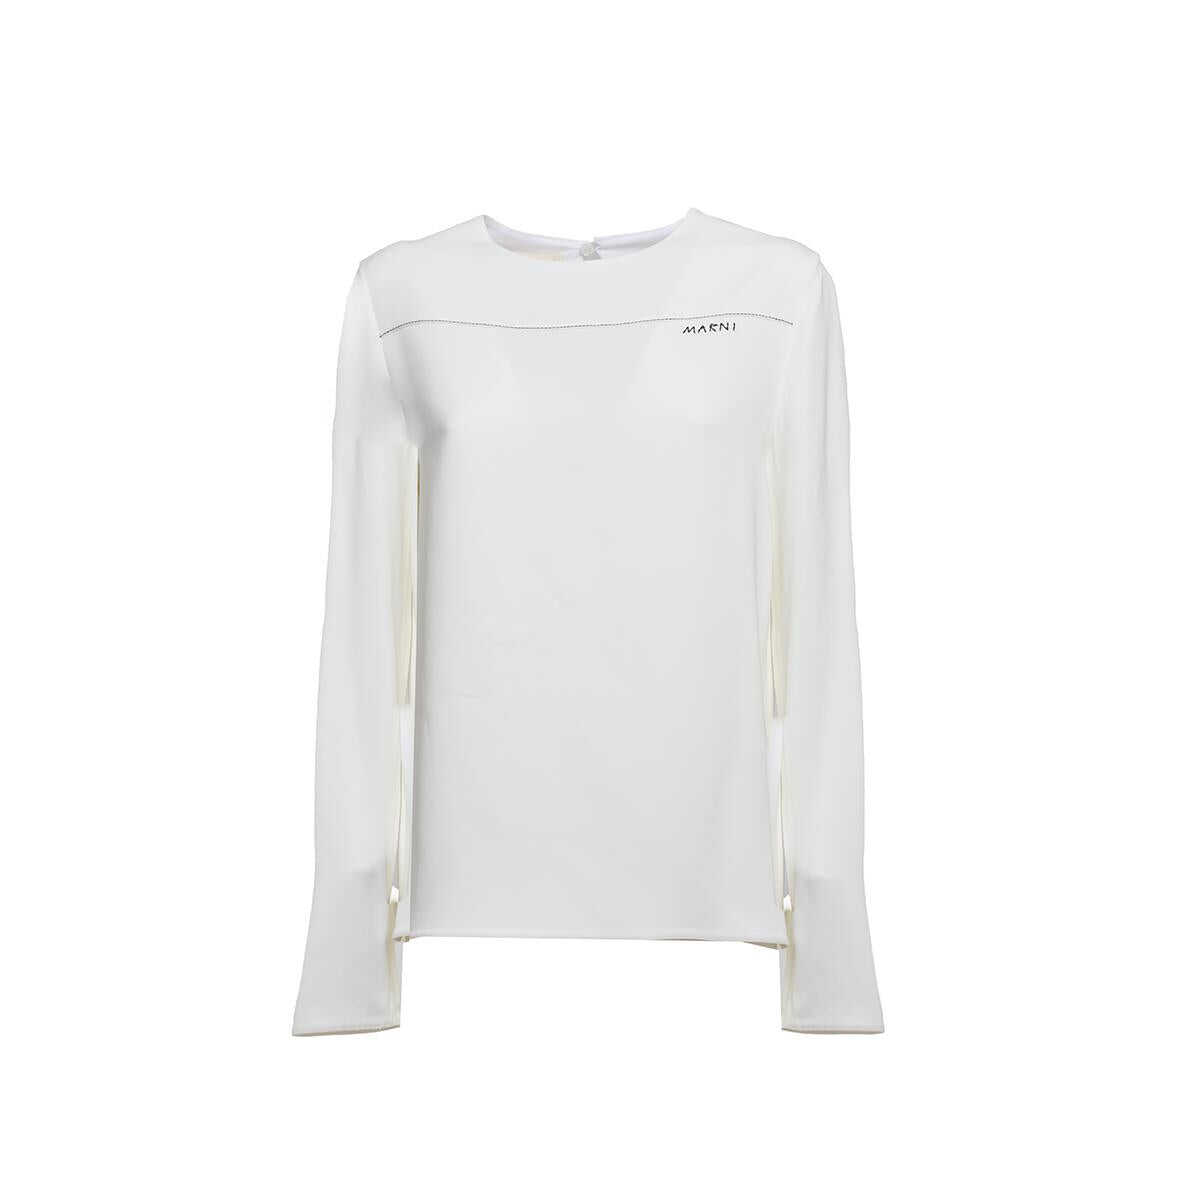 Marni MARNI White viscose blouse with line and logo Marni WHITE